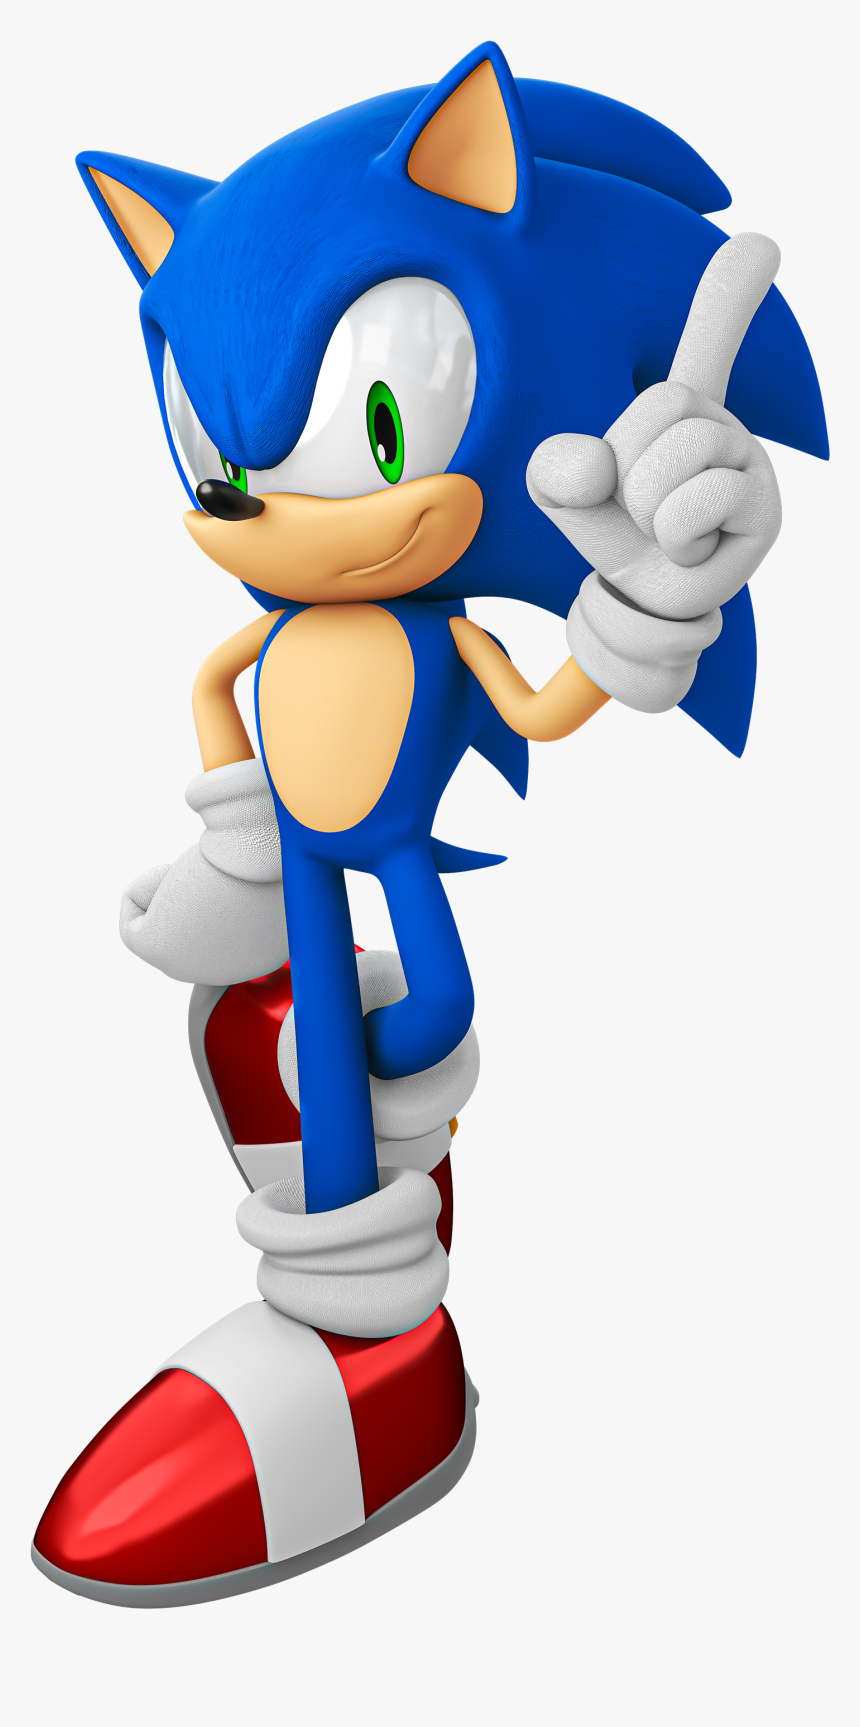 Модерн соника. Modern Classic Sonic пиксель. Модерн Соник и Классик Соник дженерейшен. Classic Sonic and Modern Sonic. Sonic современный.